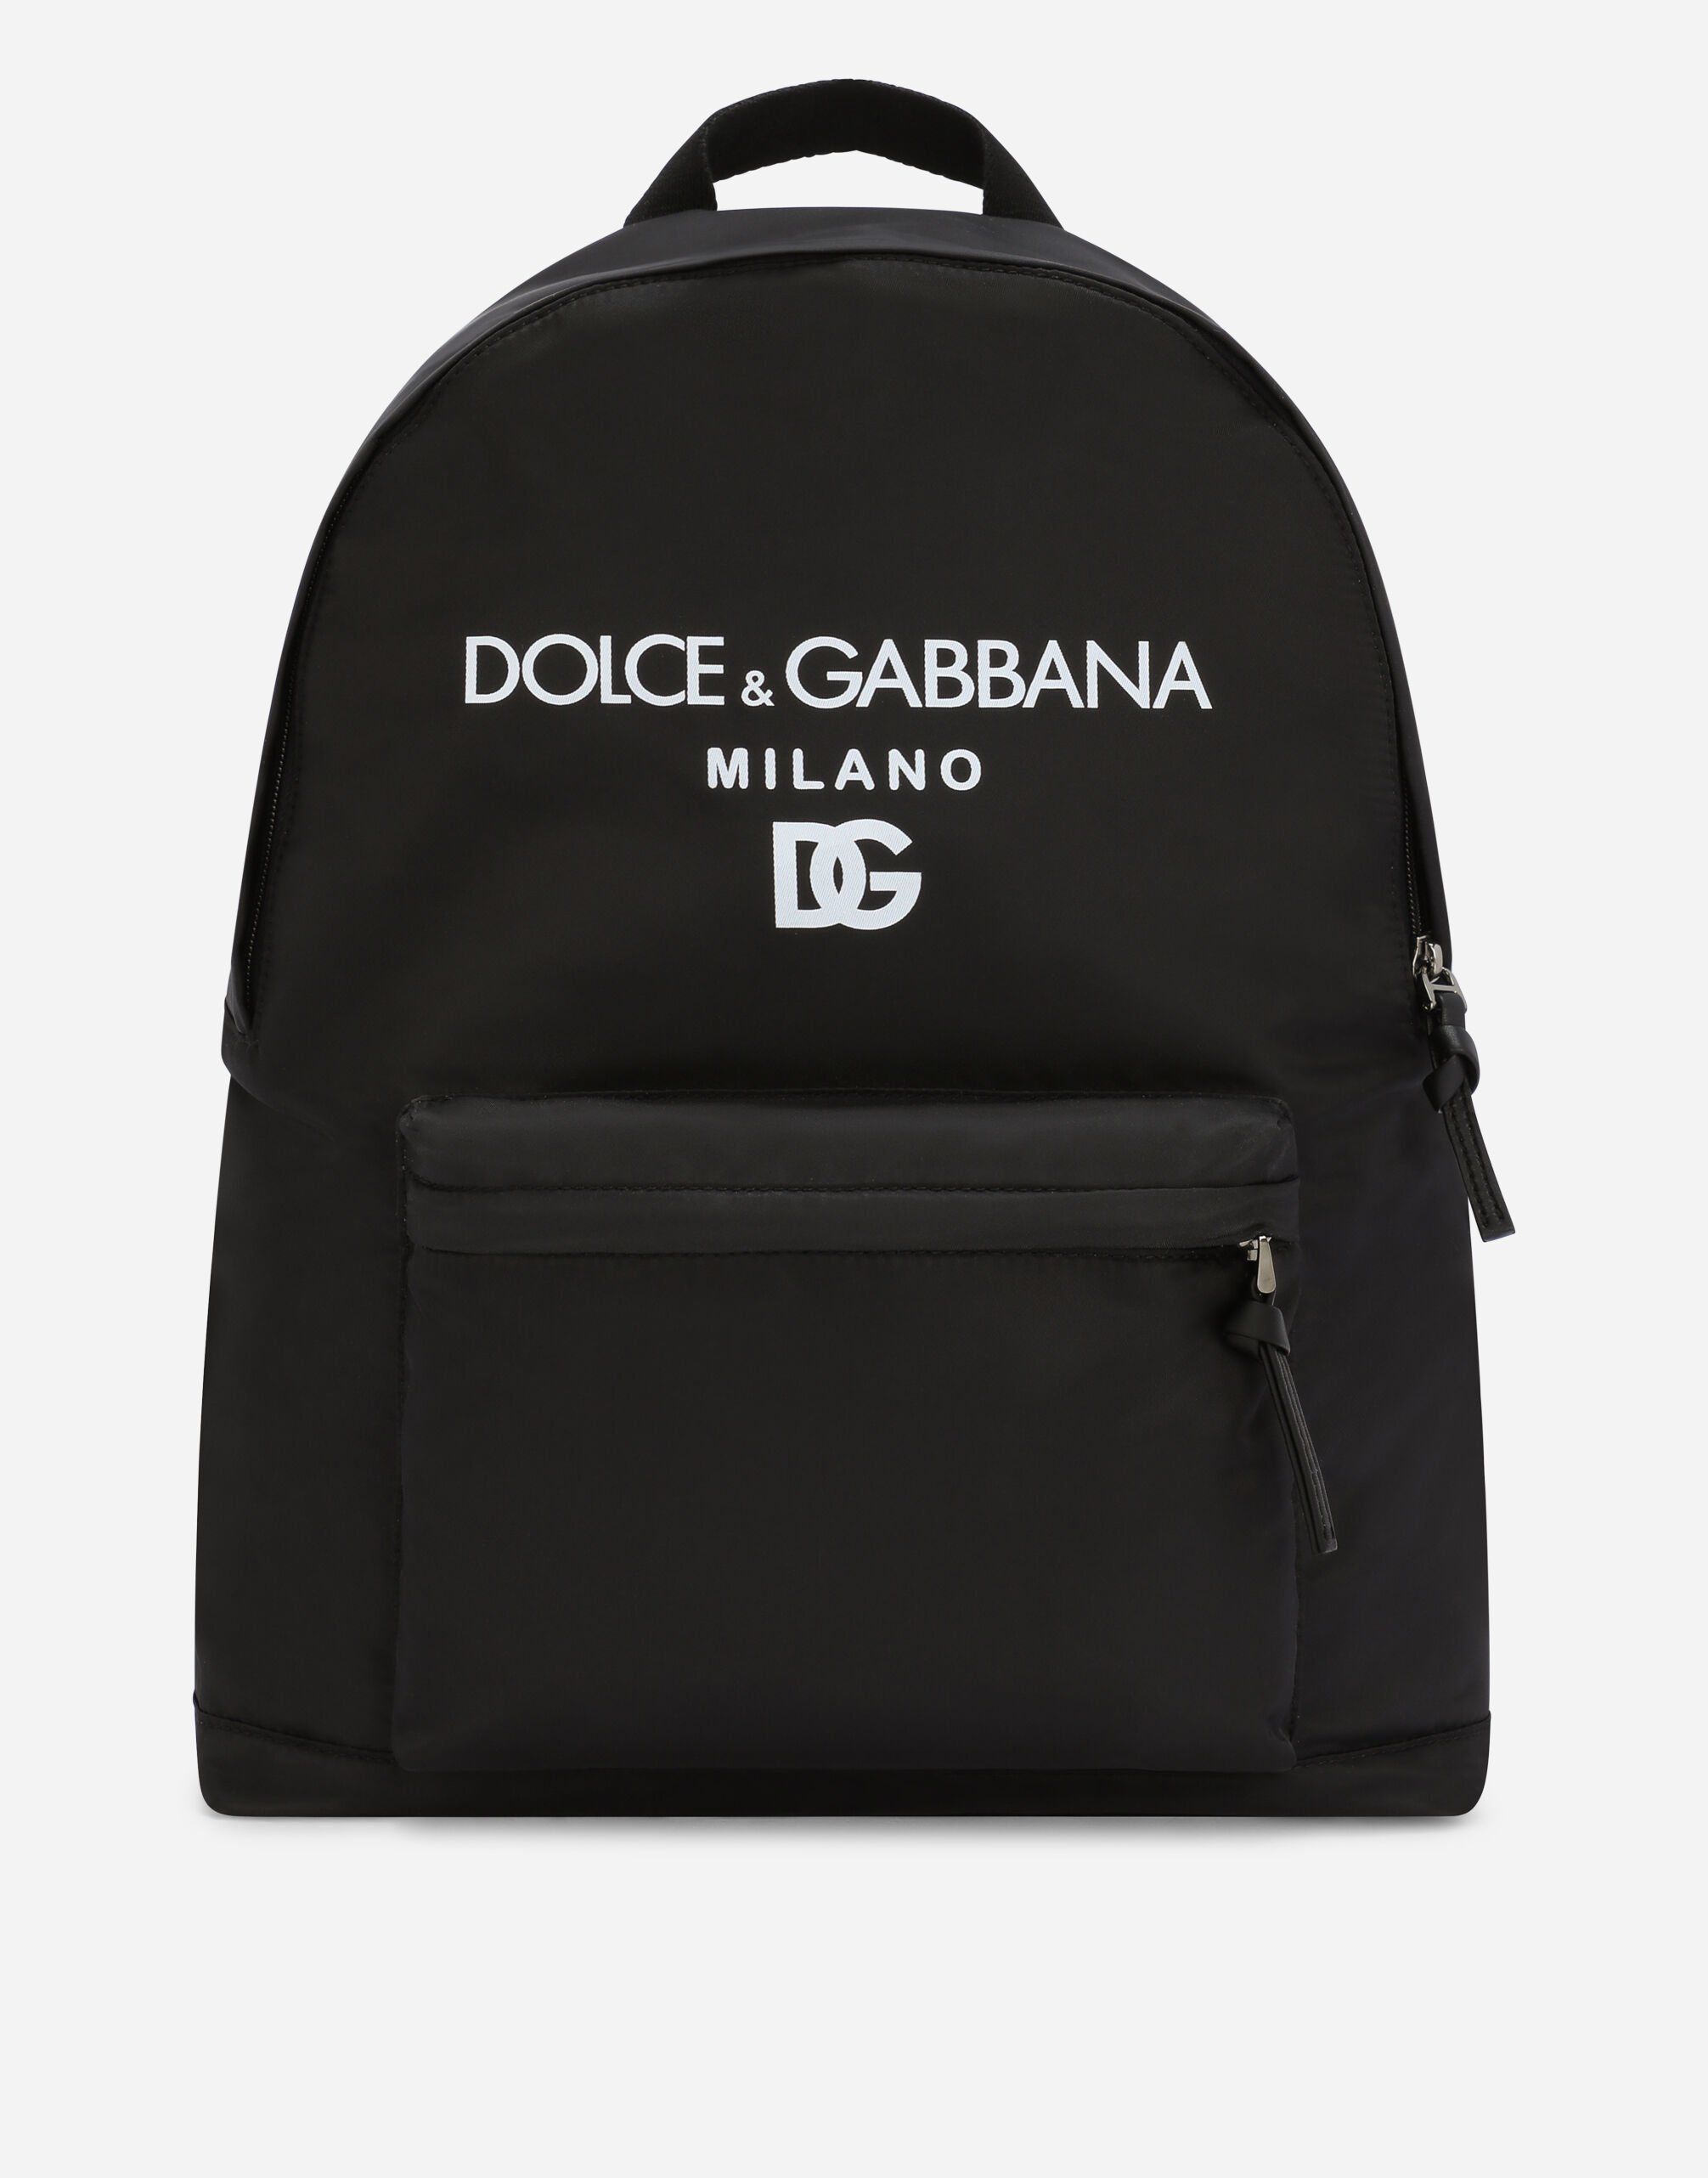 Dolce & Gabbana Nylon backpack with Dolce&Gabbana Milano print Black EB0003AB000